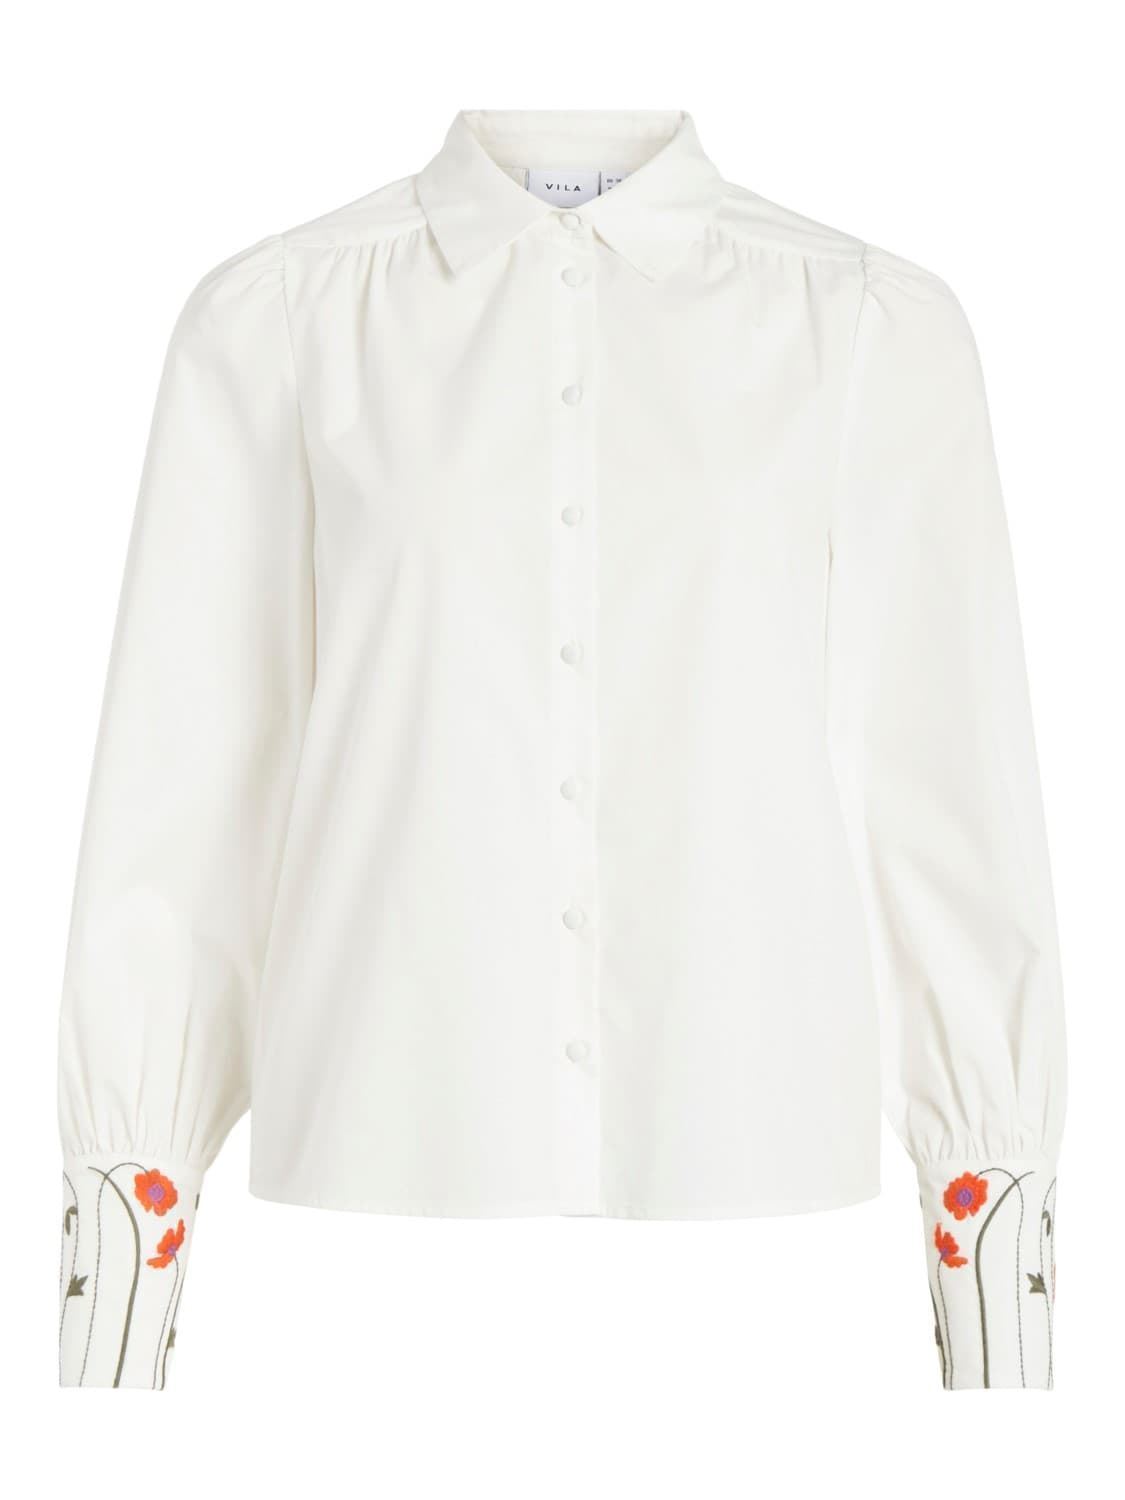 Camisa blanca Vipruda - Imagen 1